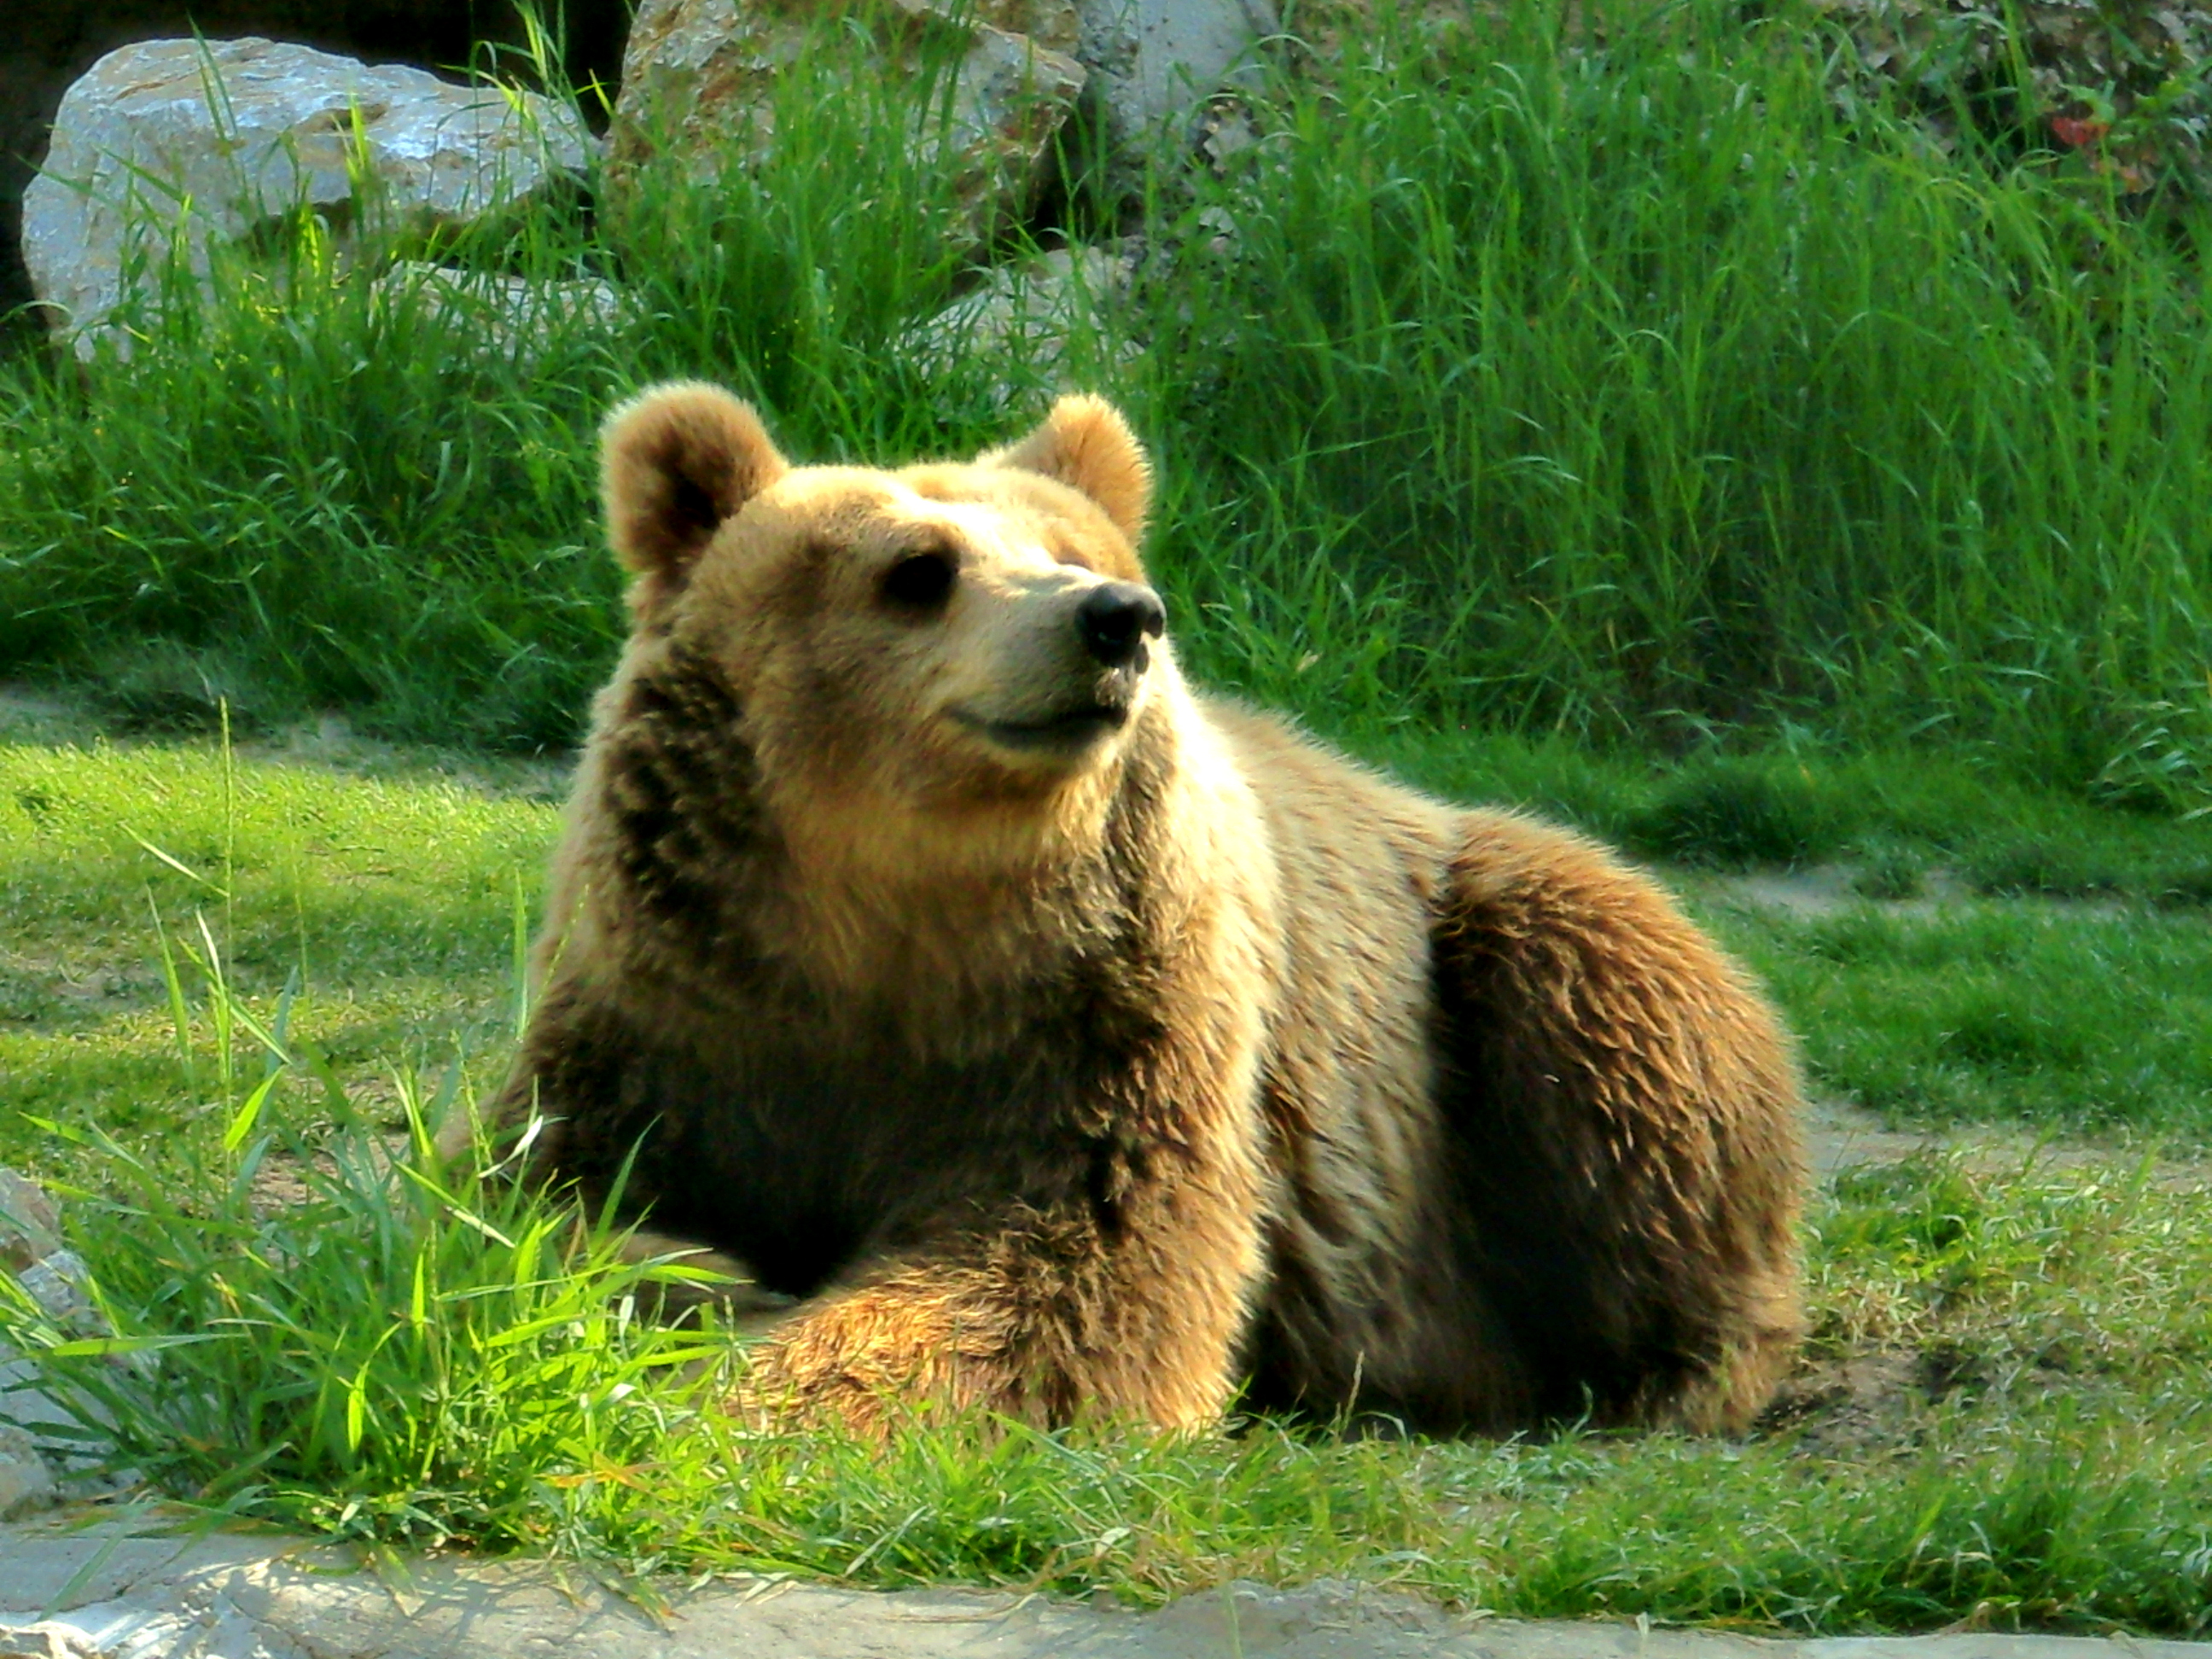 Black bear zoo subotica palic serbia by darkonsu on DeviantArt